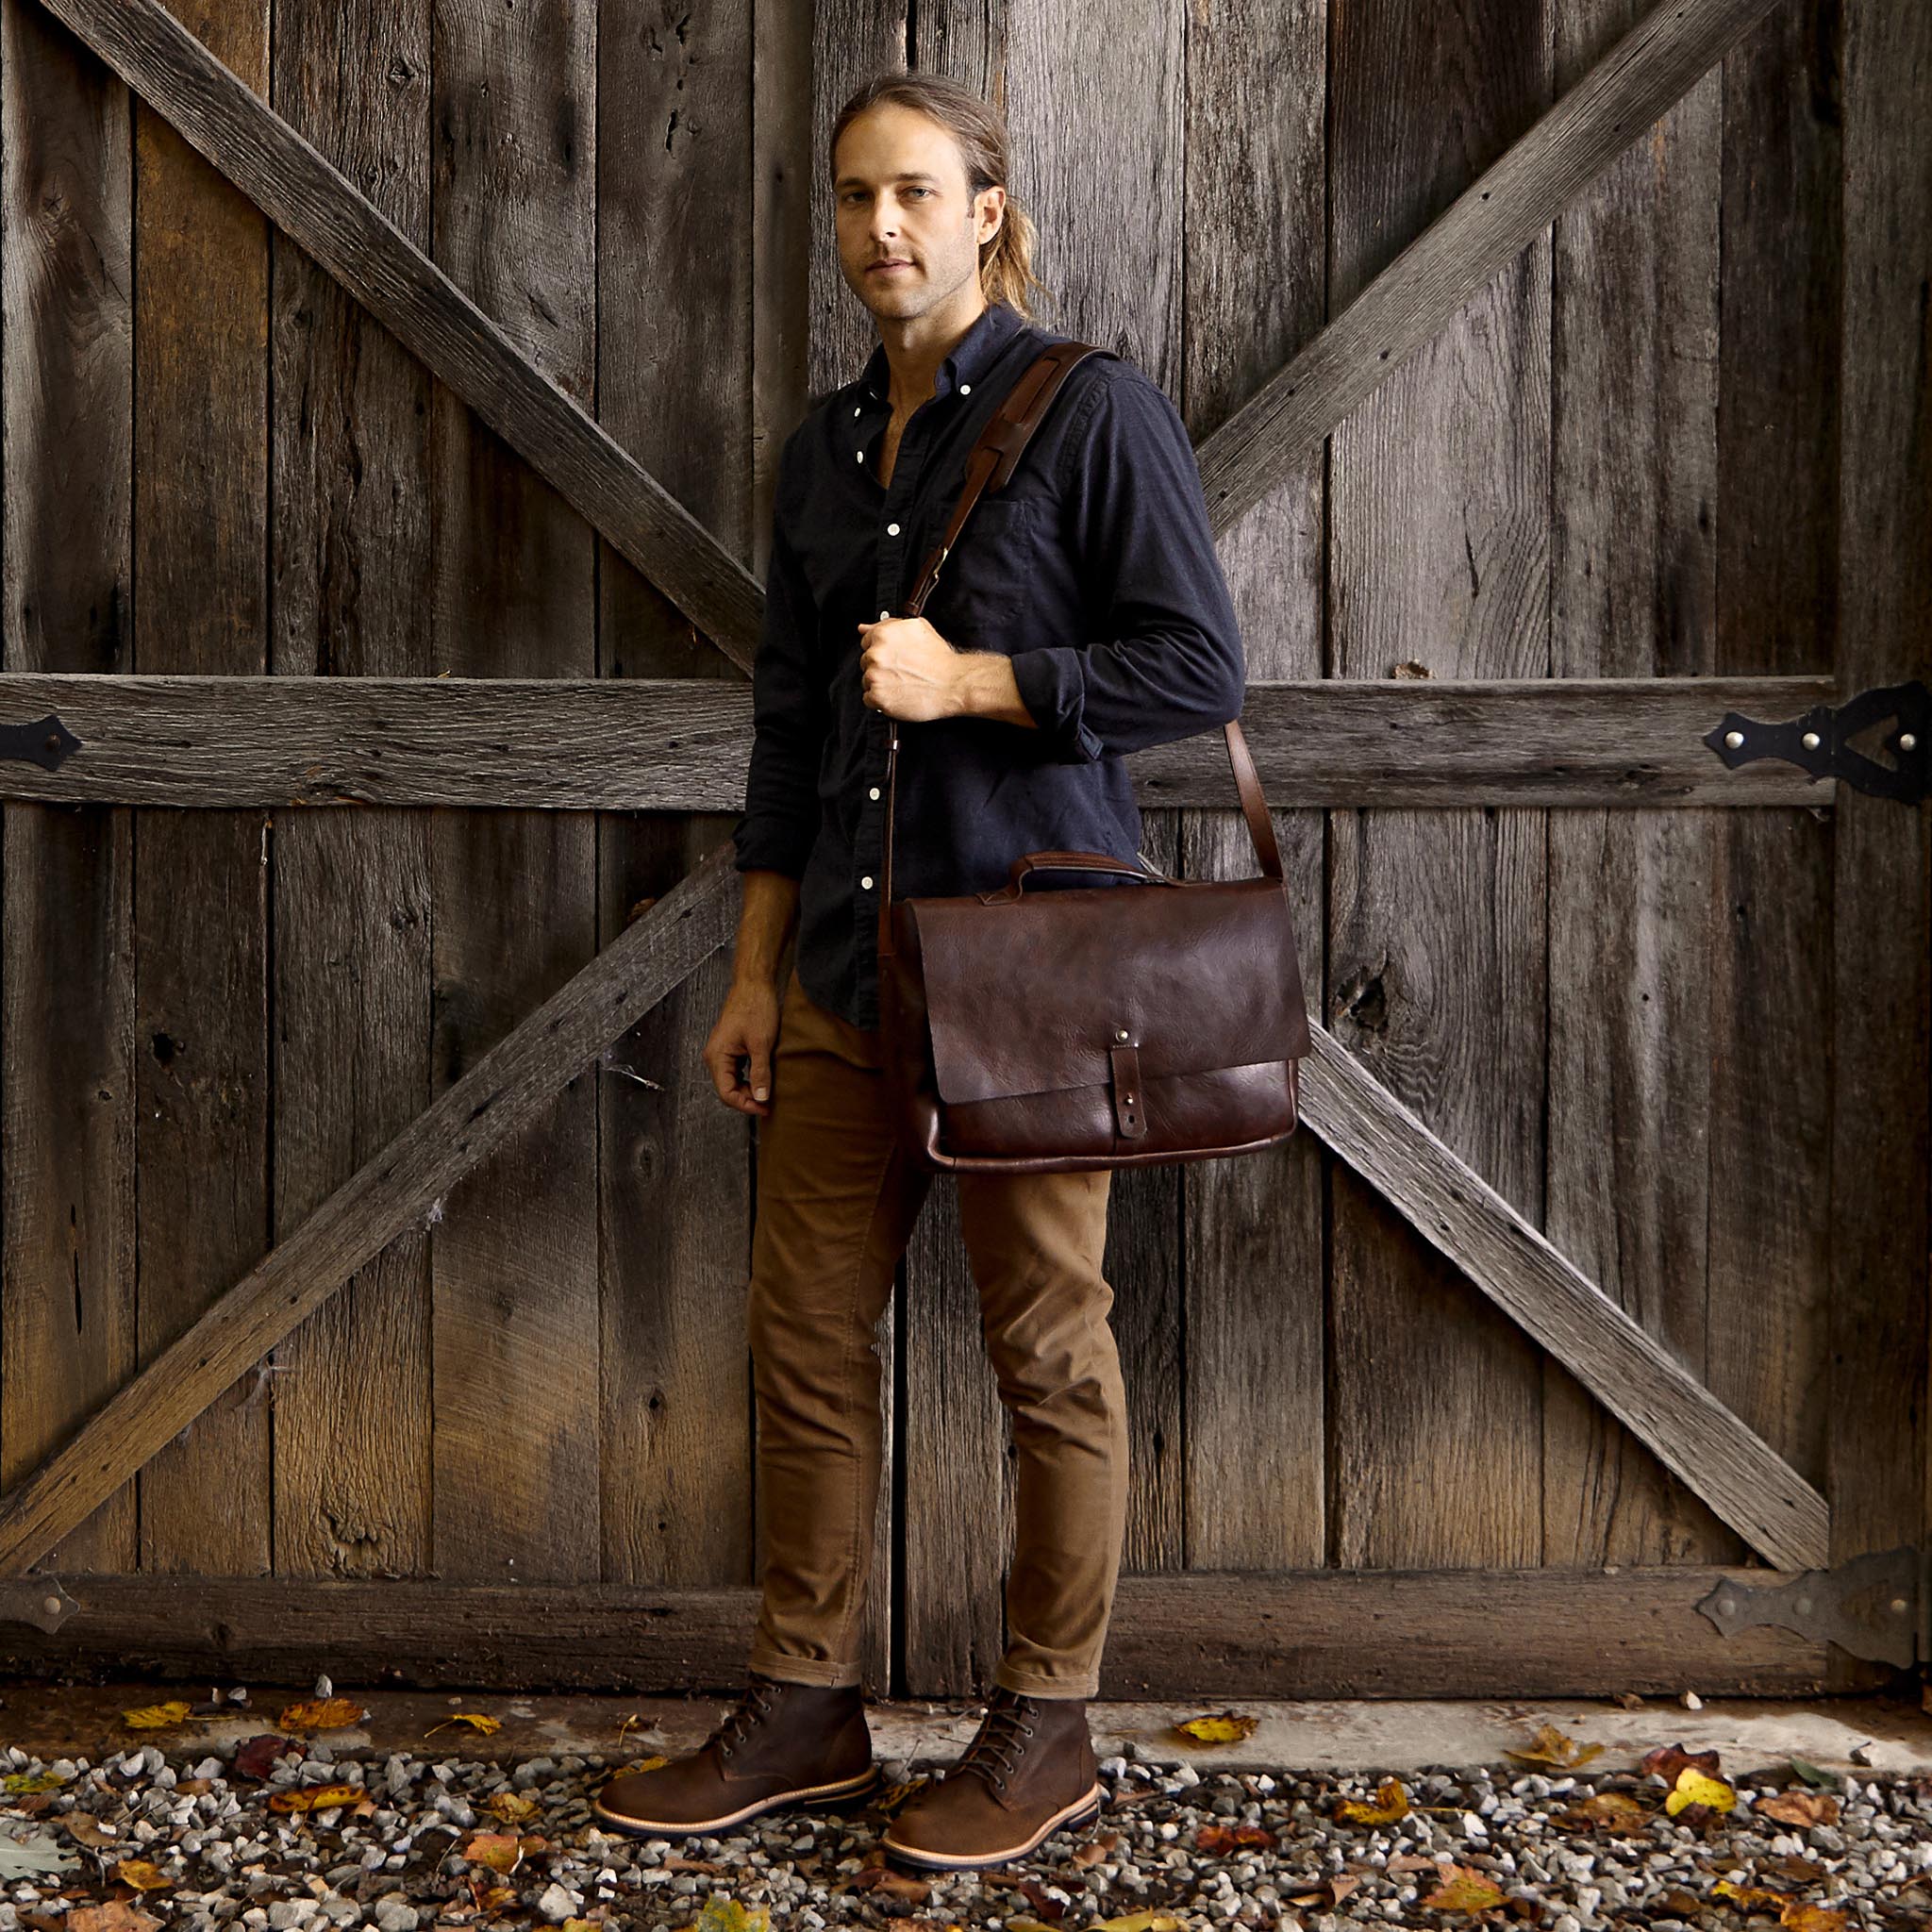 Small Messenger Bag iPad/Tab Satchel Handbags Crossbody Sling Black Leather  Bags | eBay